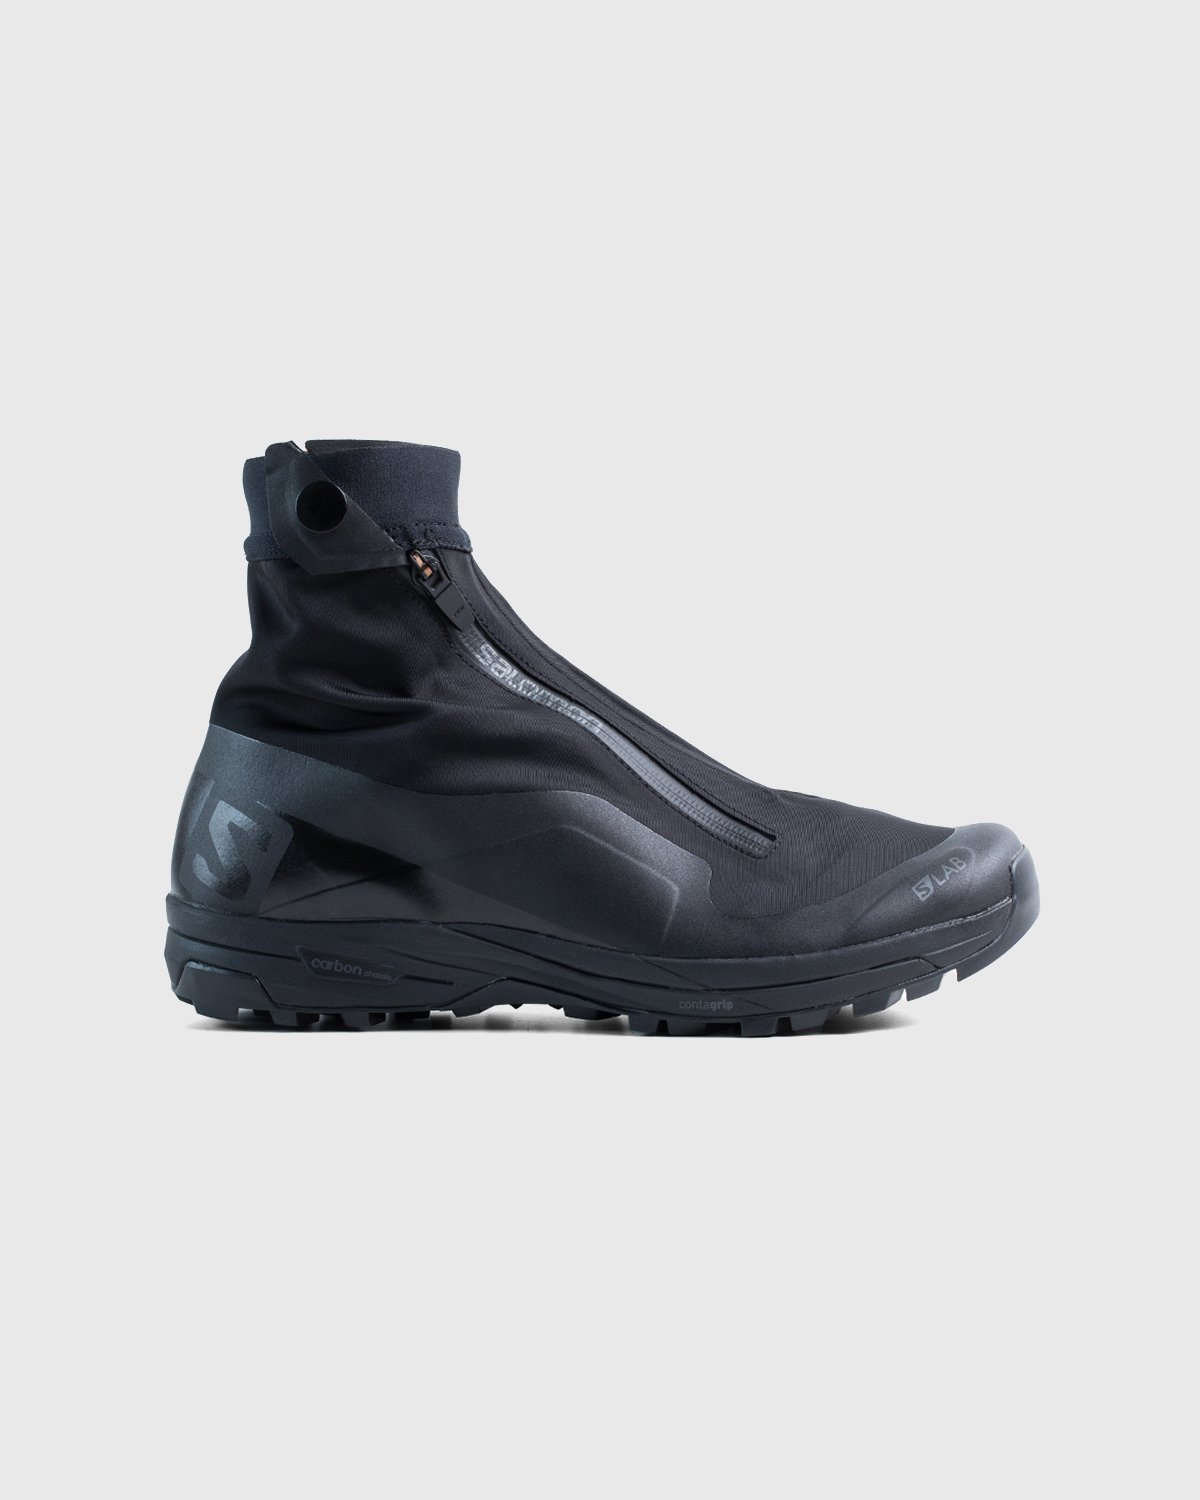 Salomon - S/Lab XA-Alpine 2 Limited Edition Black - Footwear - Black - Image 1